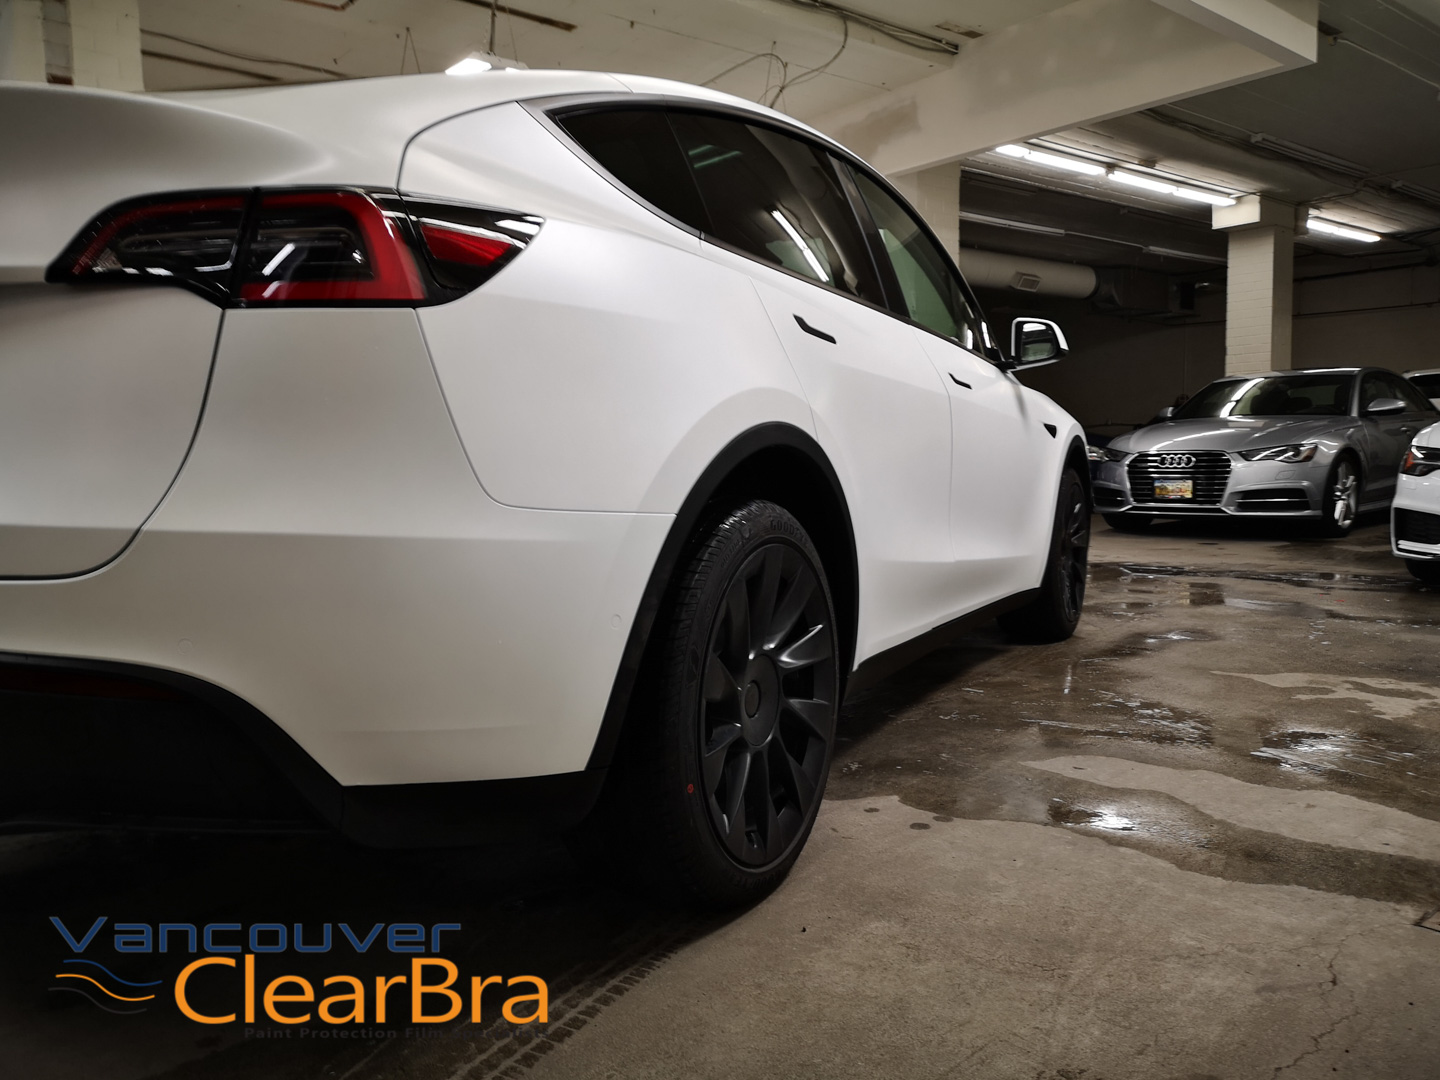 Matte White Tesla Model 3 - Vancouver ClearBra